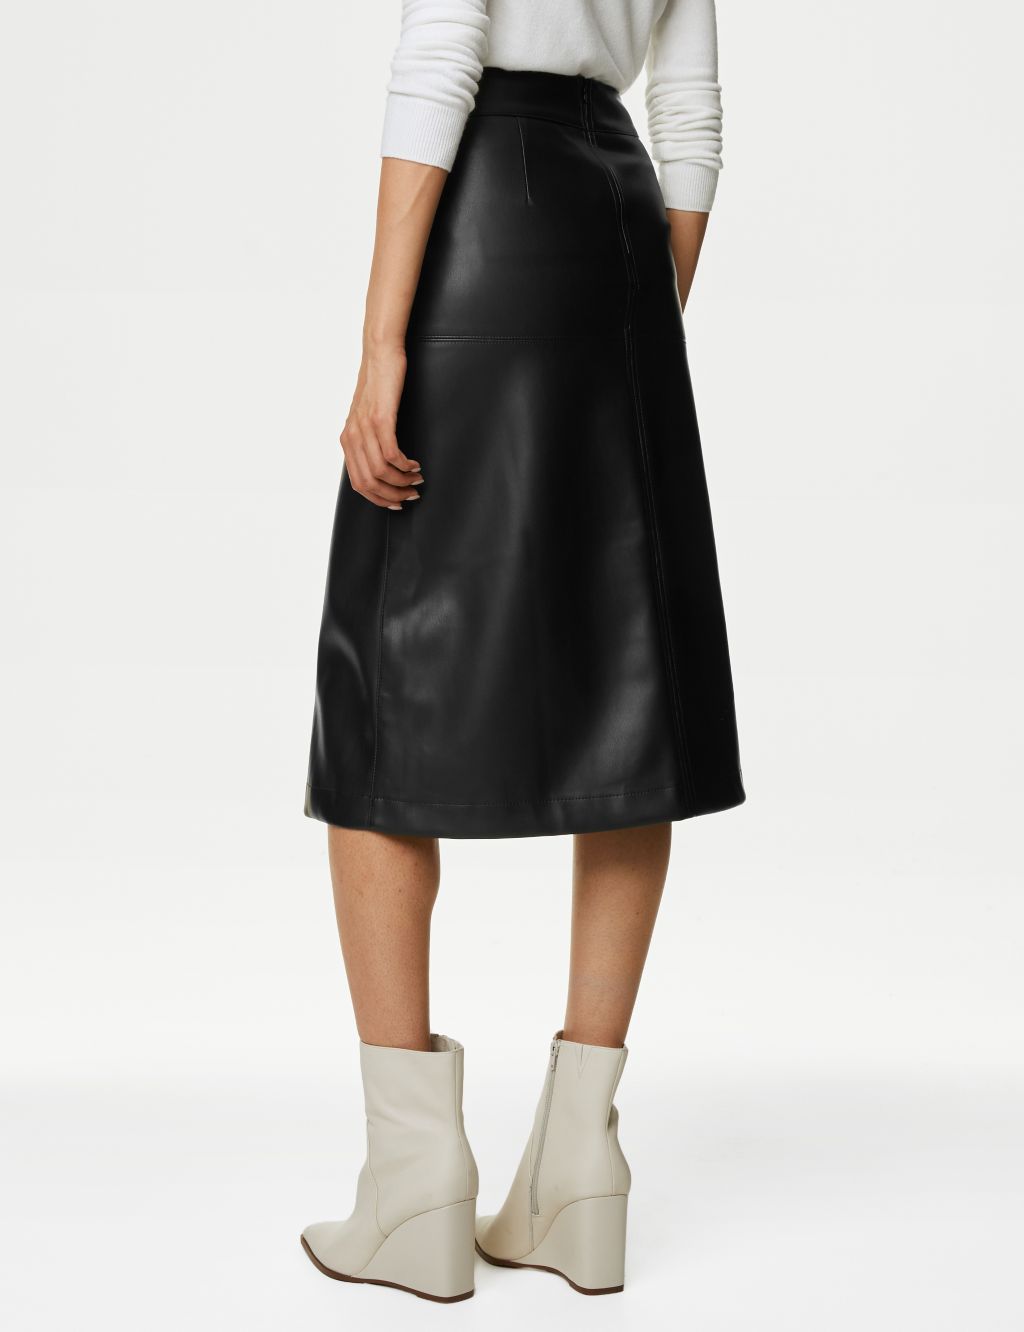 Leather Look Seam Detail Midi A-Line Skirt image 5